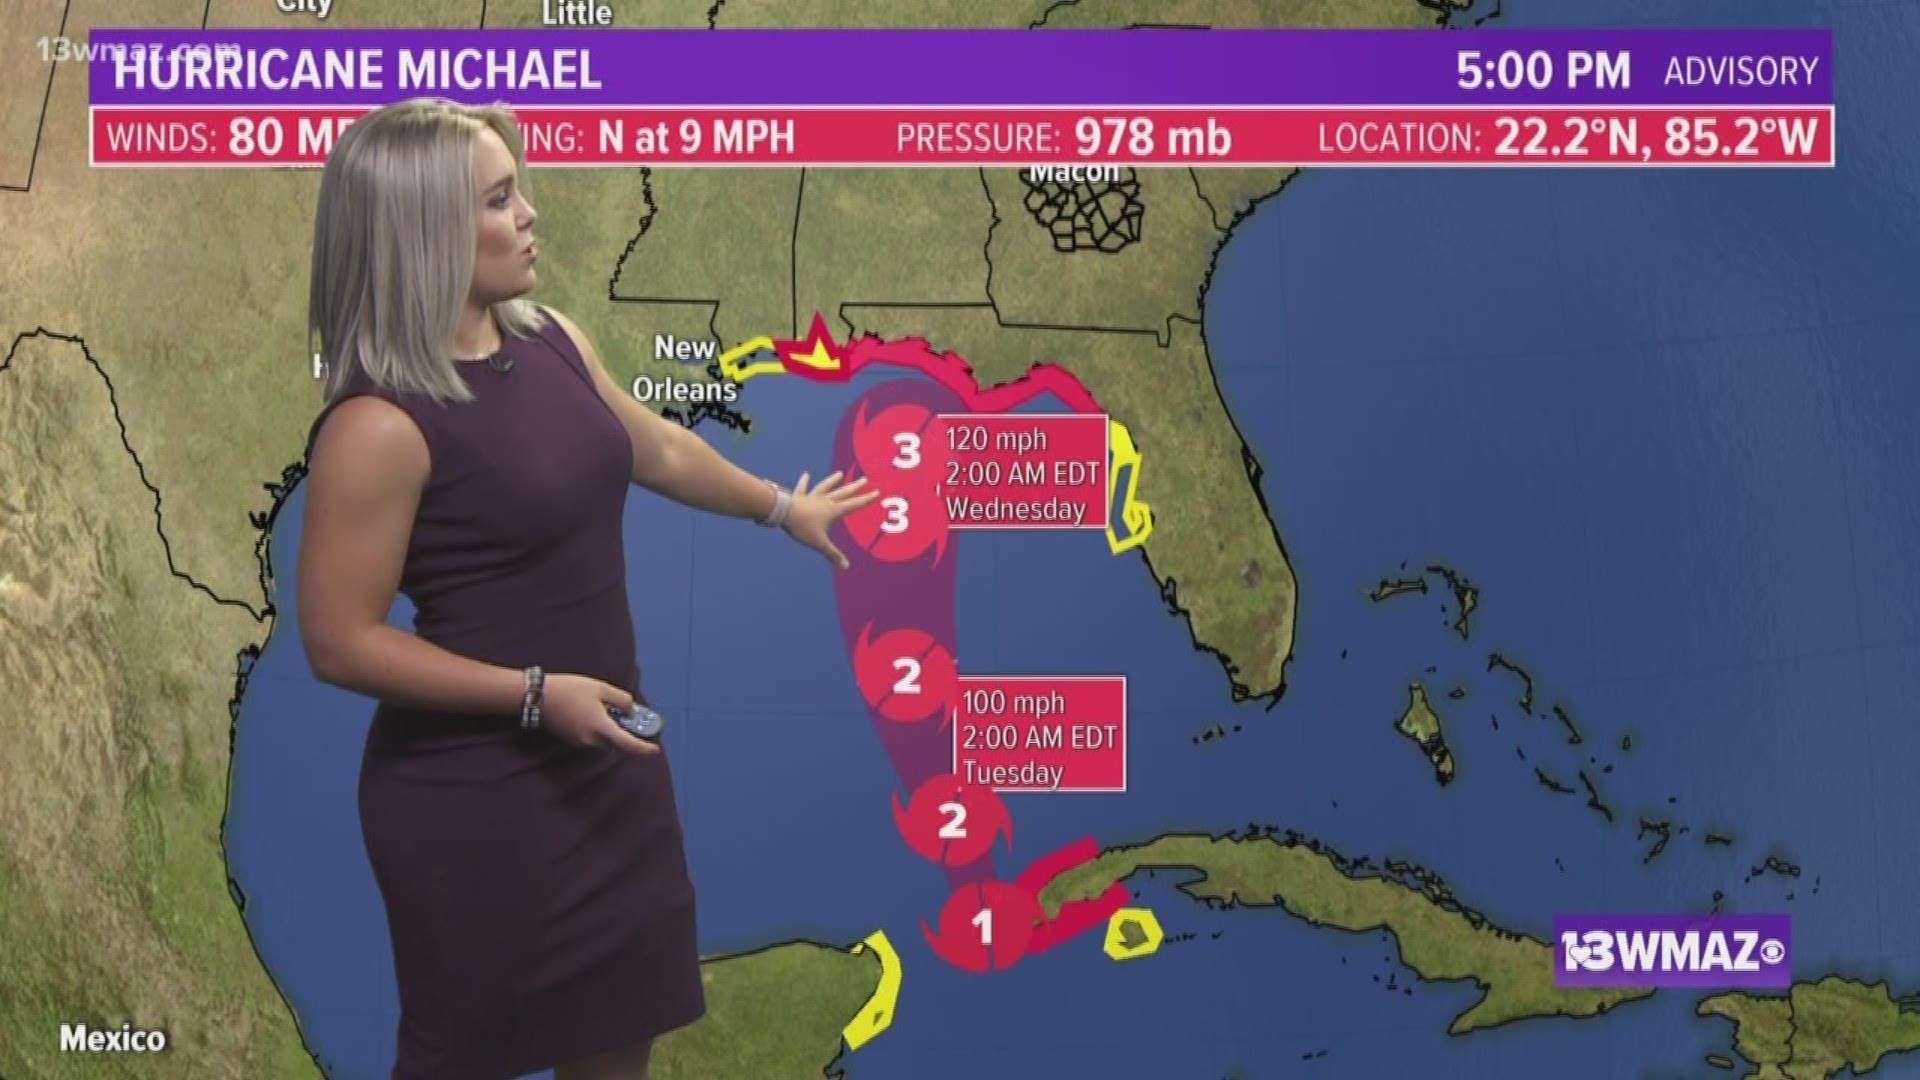 Tracking Hurricane Michael | 5pm update (10/8) | nrd.kbic-nsn.gov